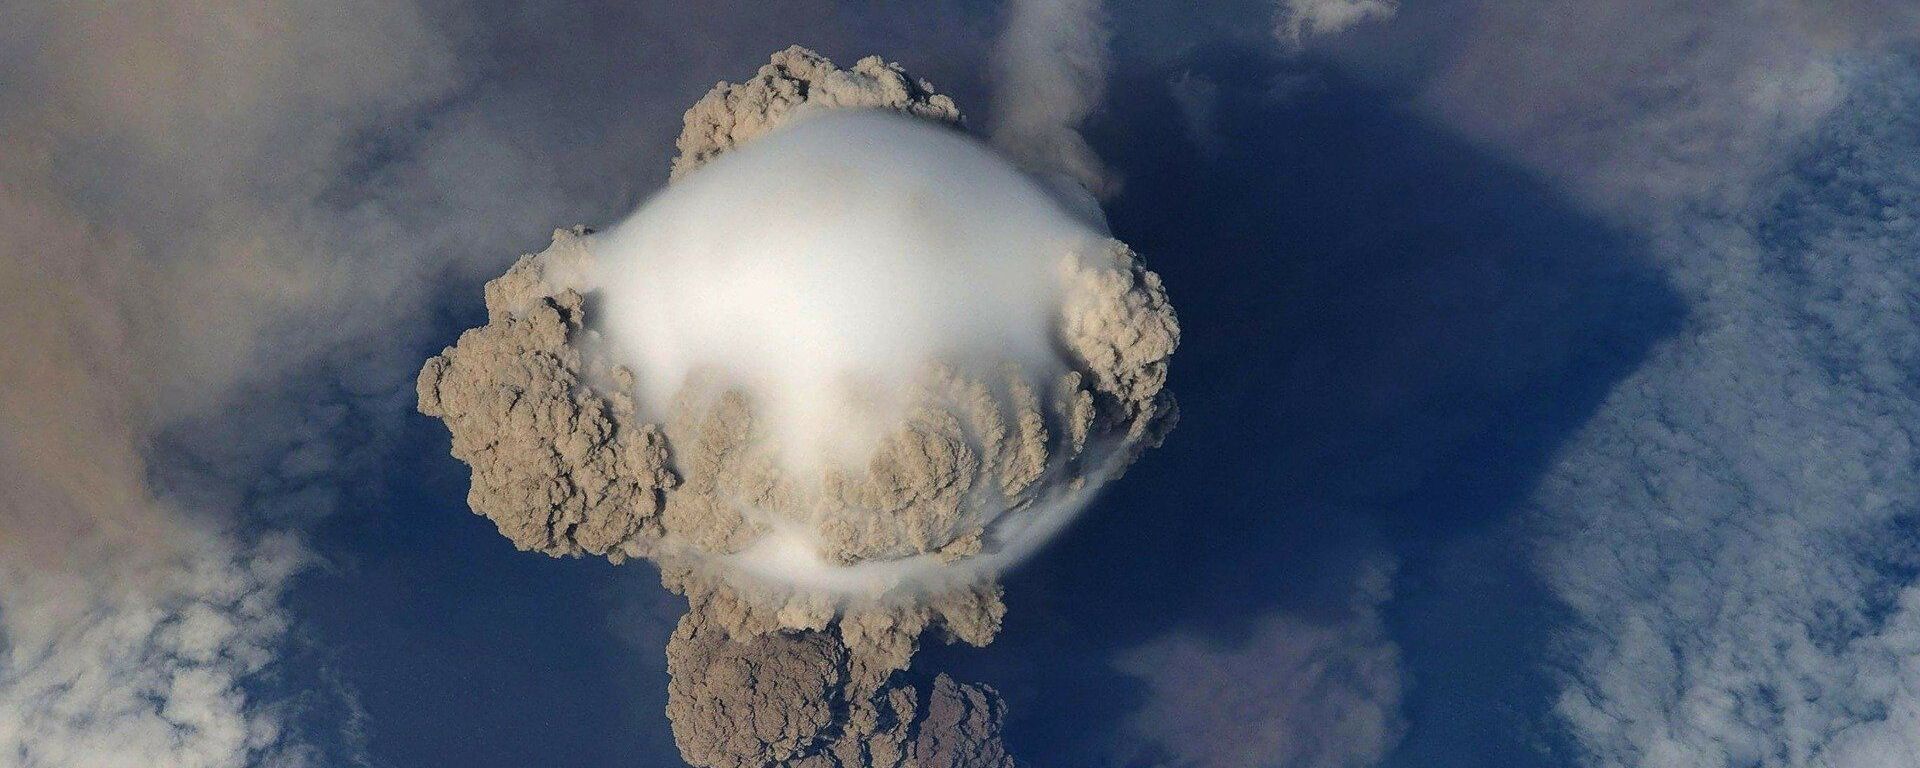 Erupción de un volcán (imagen referencial) - Sputnik Mundo, 1920, 15.02.2021